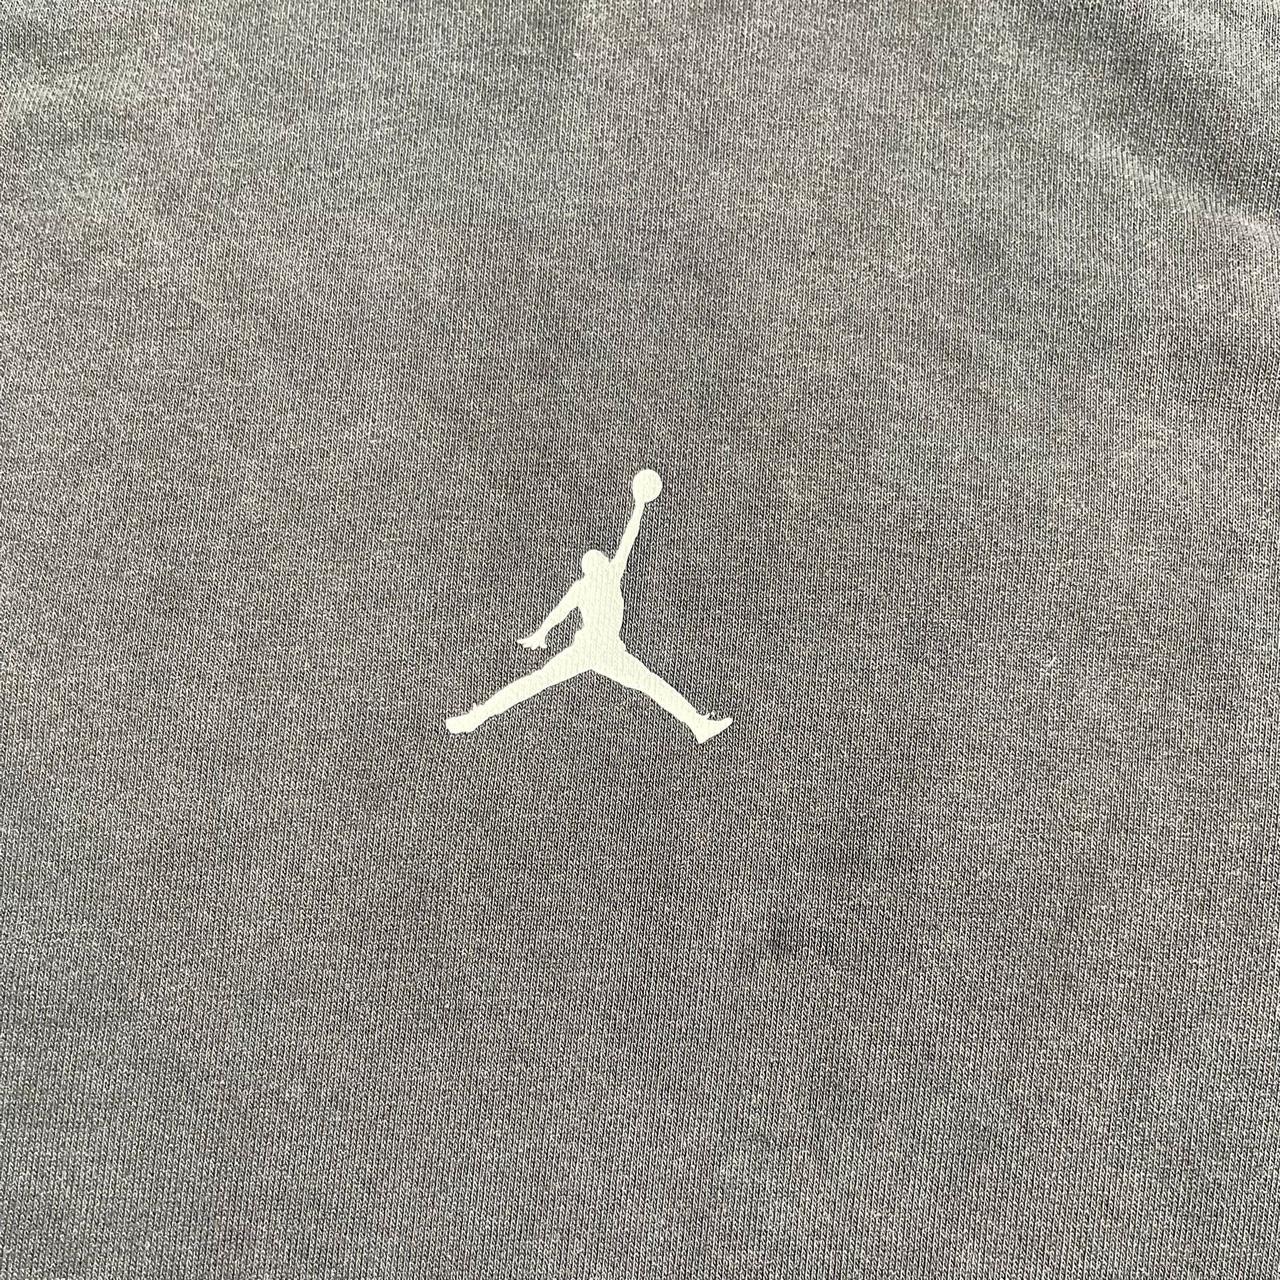 Jordan Center Logo Hoodie Size Large In great... - Depop